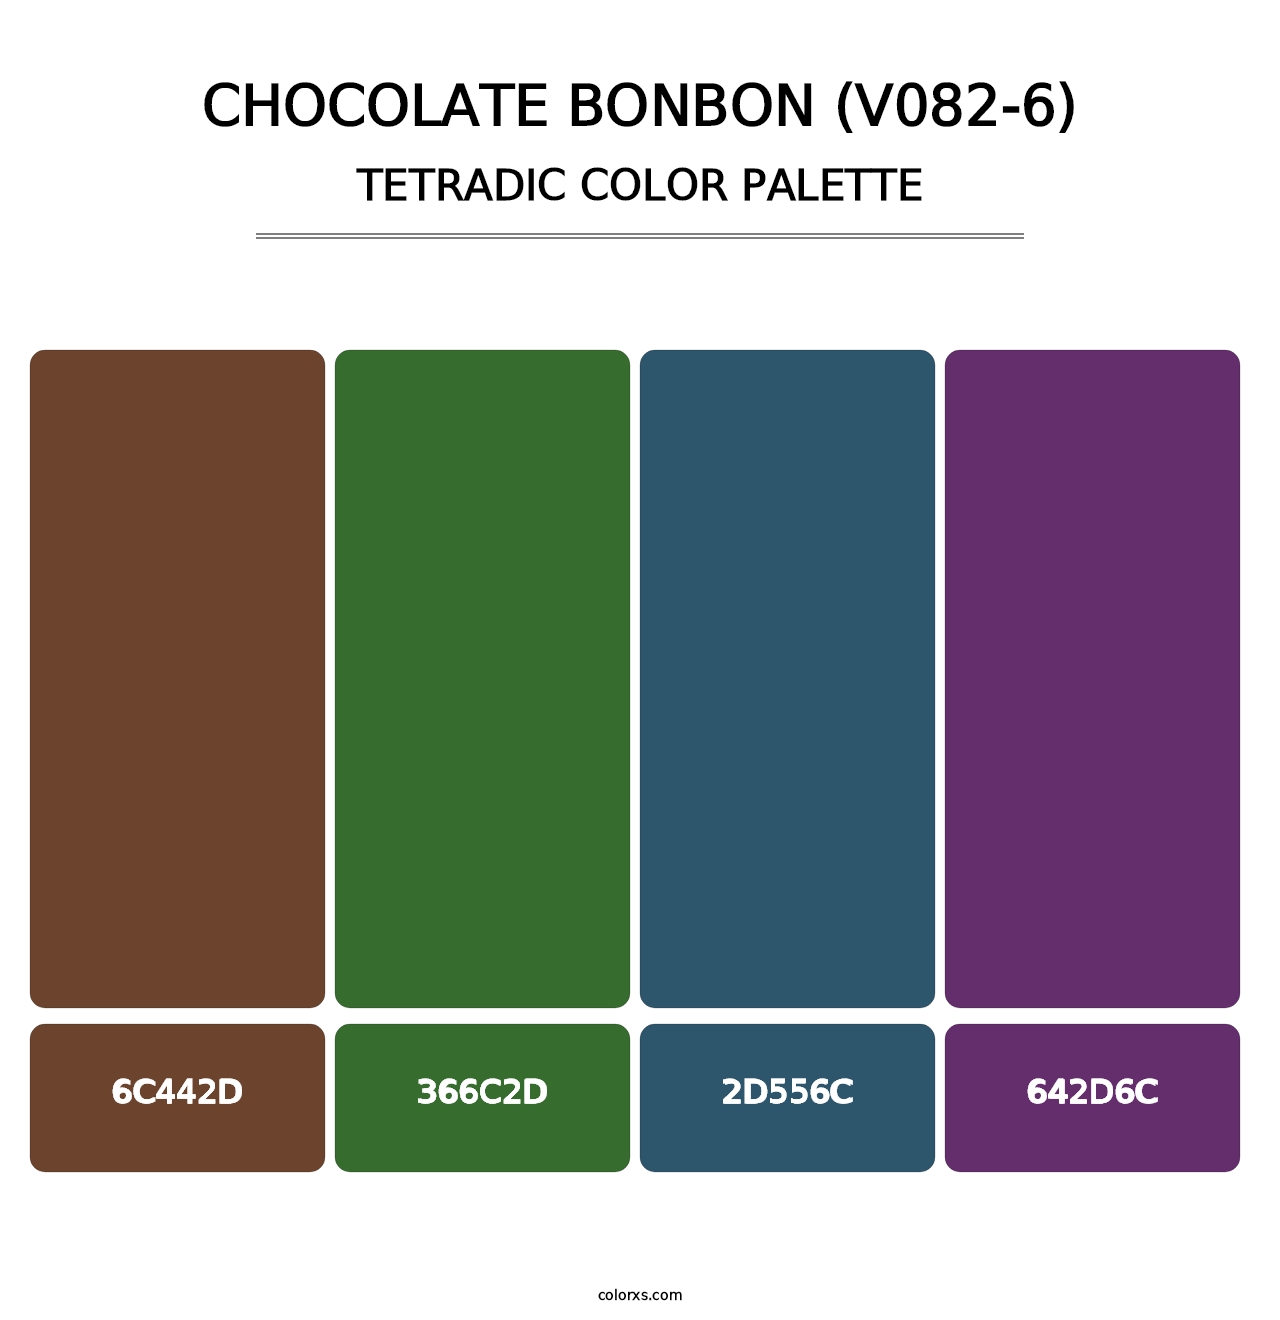 Chocolate Bonbon (V082-6) - Tetradic Color Palette